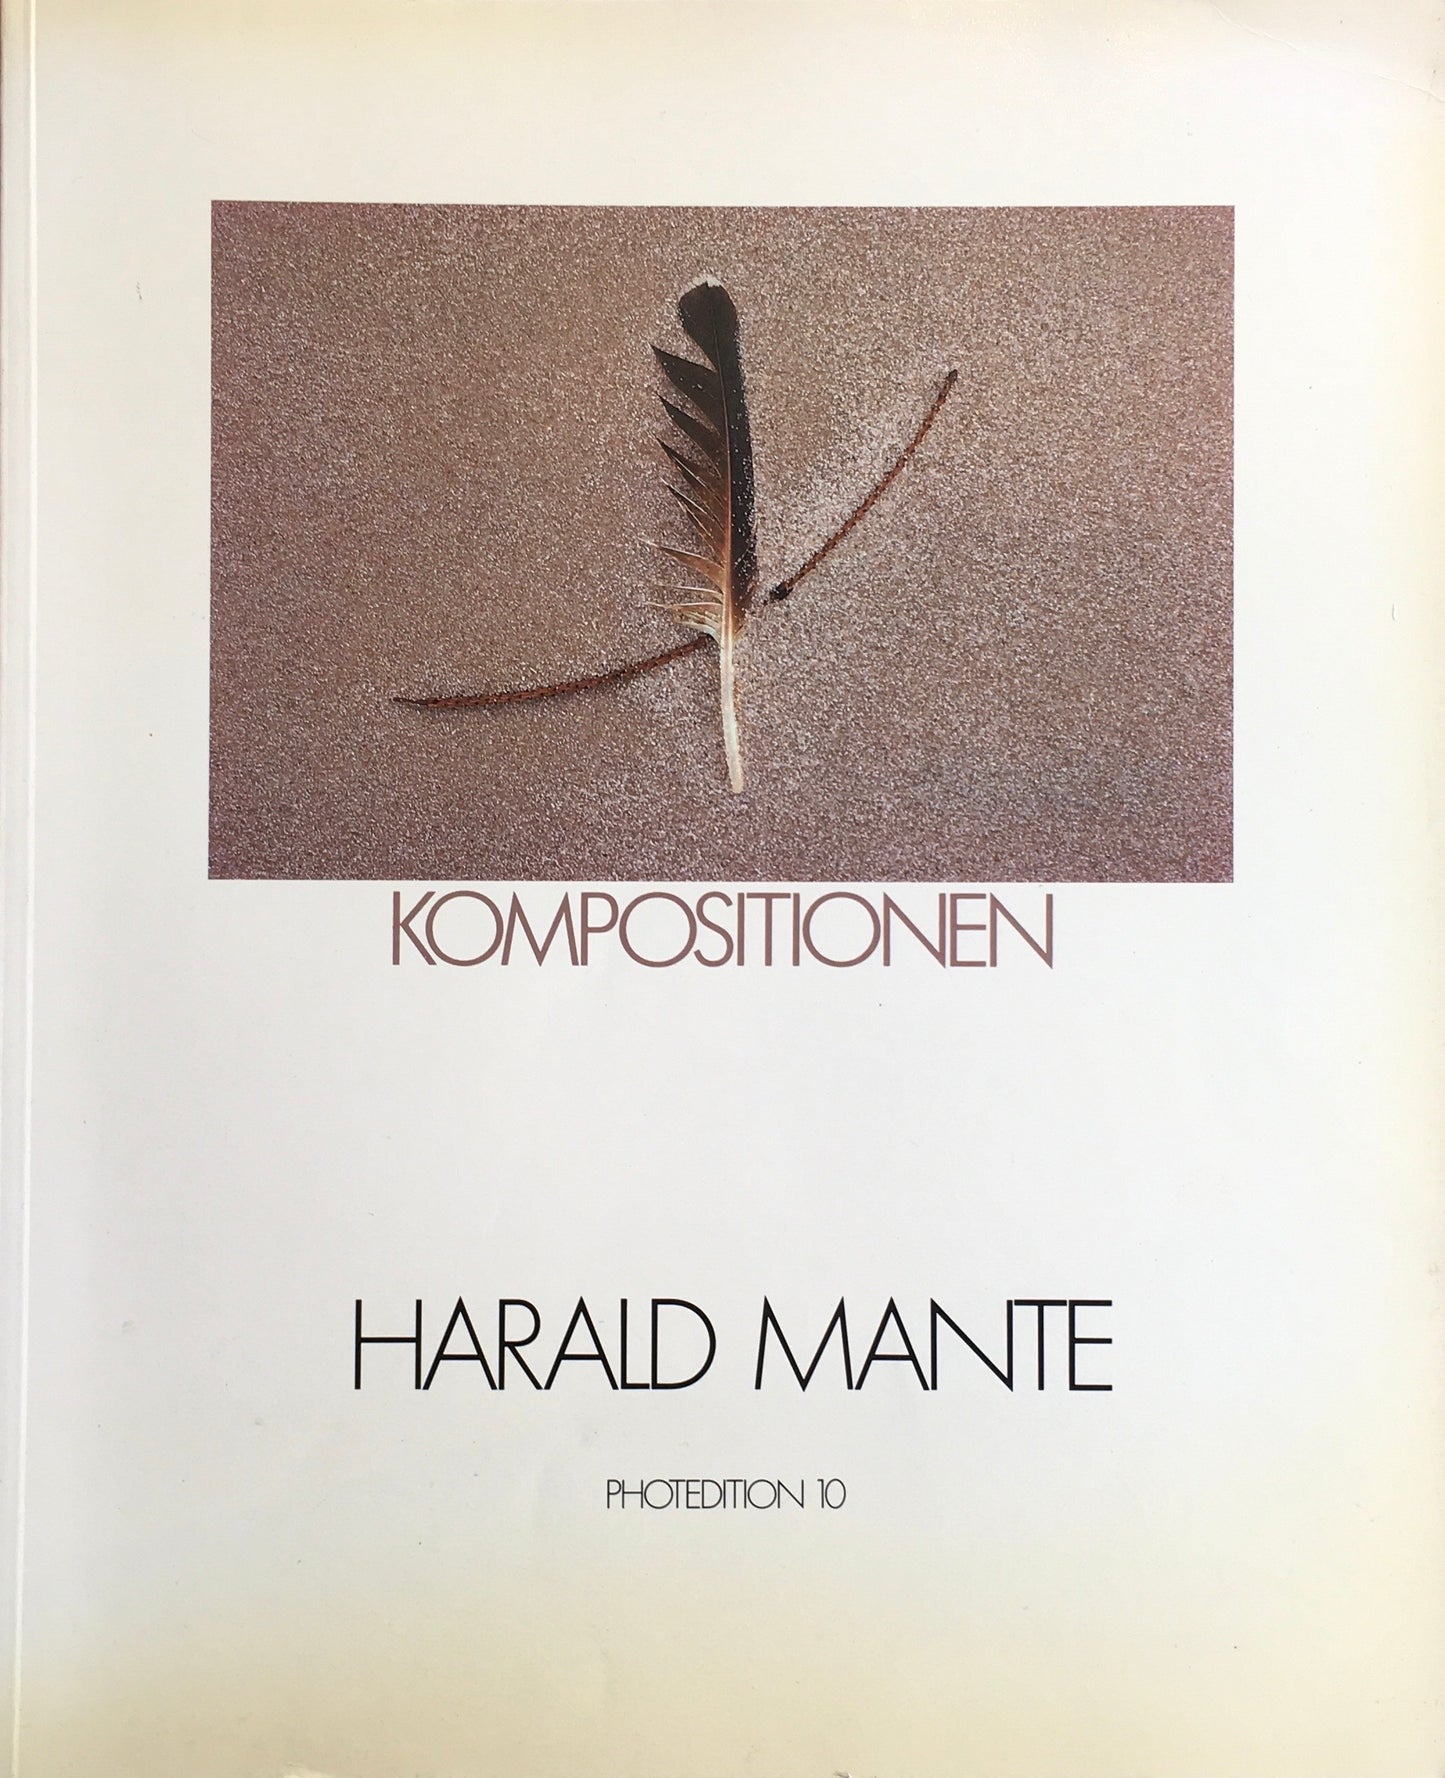 Kompositionen　Harald Mante　Photedition 9　ハラルド・マンテ写真集